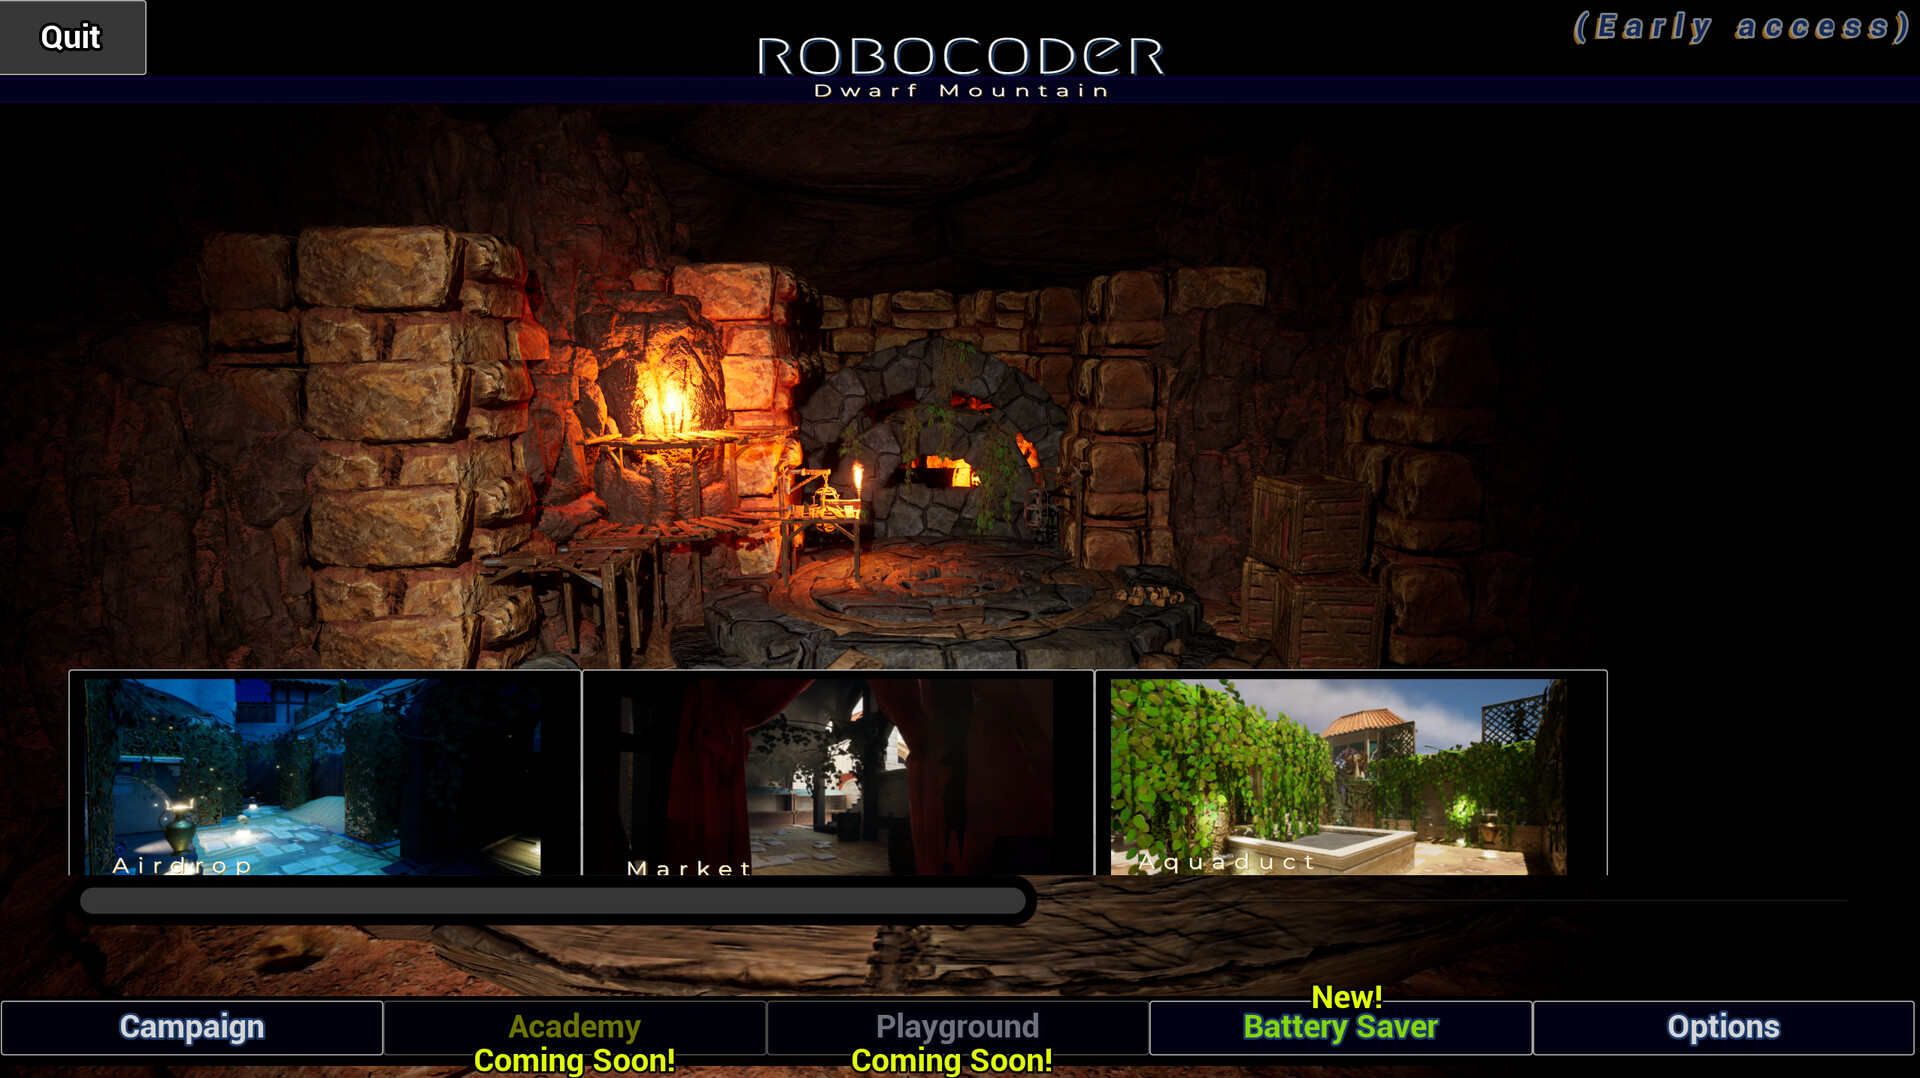 Robocoder - Dwarf Mountain (Early Access) Demo Featured Screenshot #1